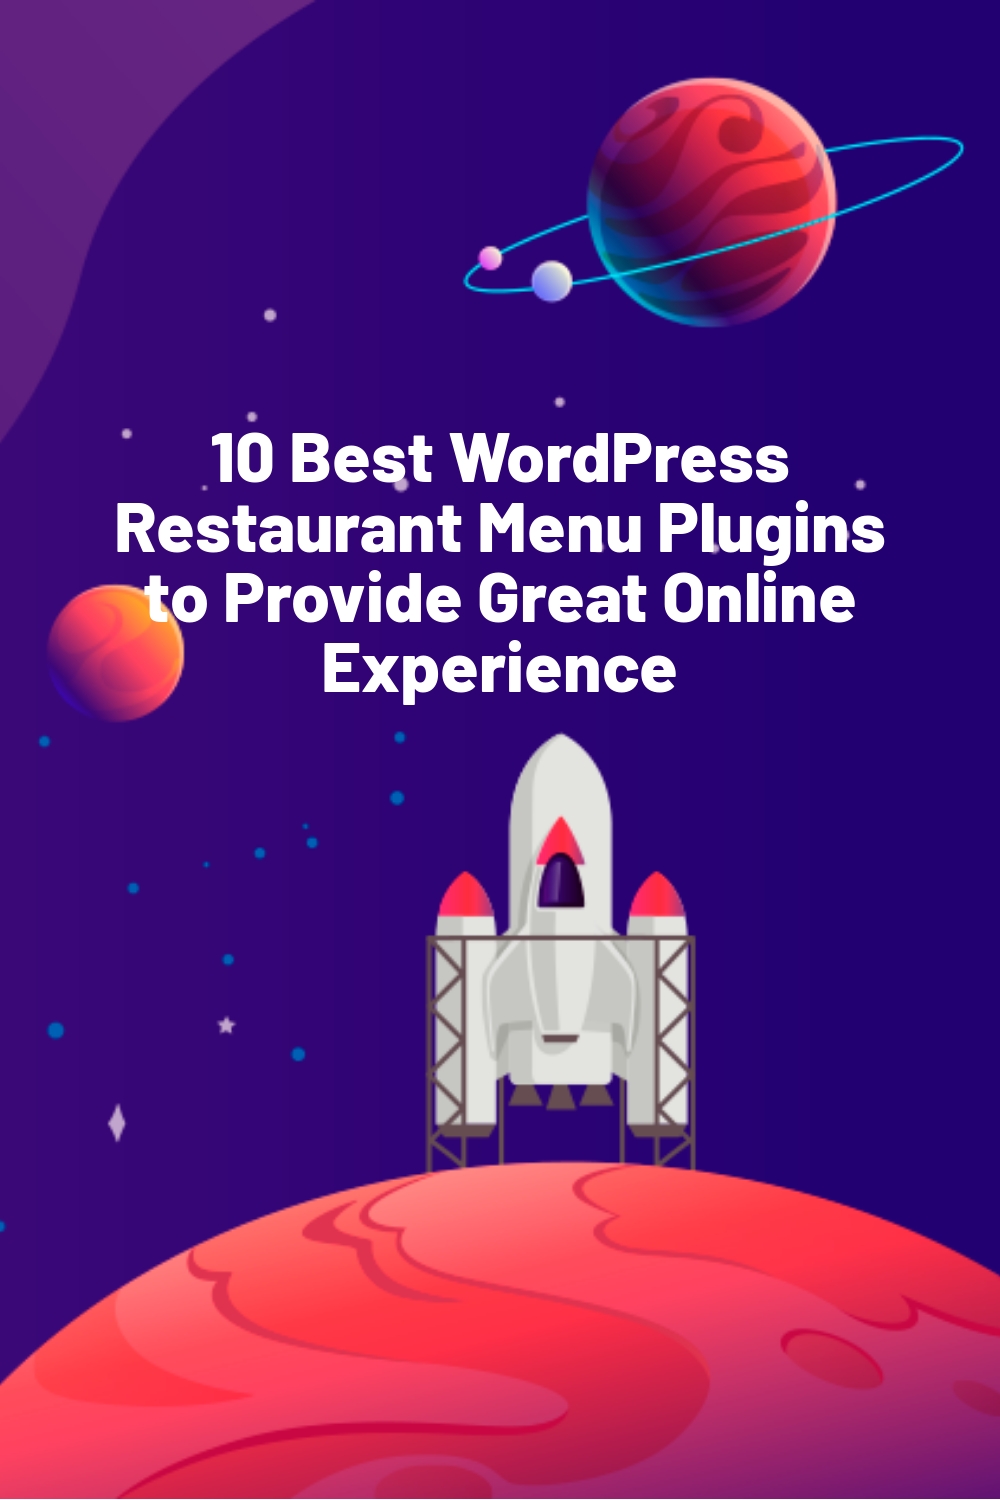 10 Best WordPress Restaurant Menu Plugins to Provide Great Online Experience